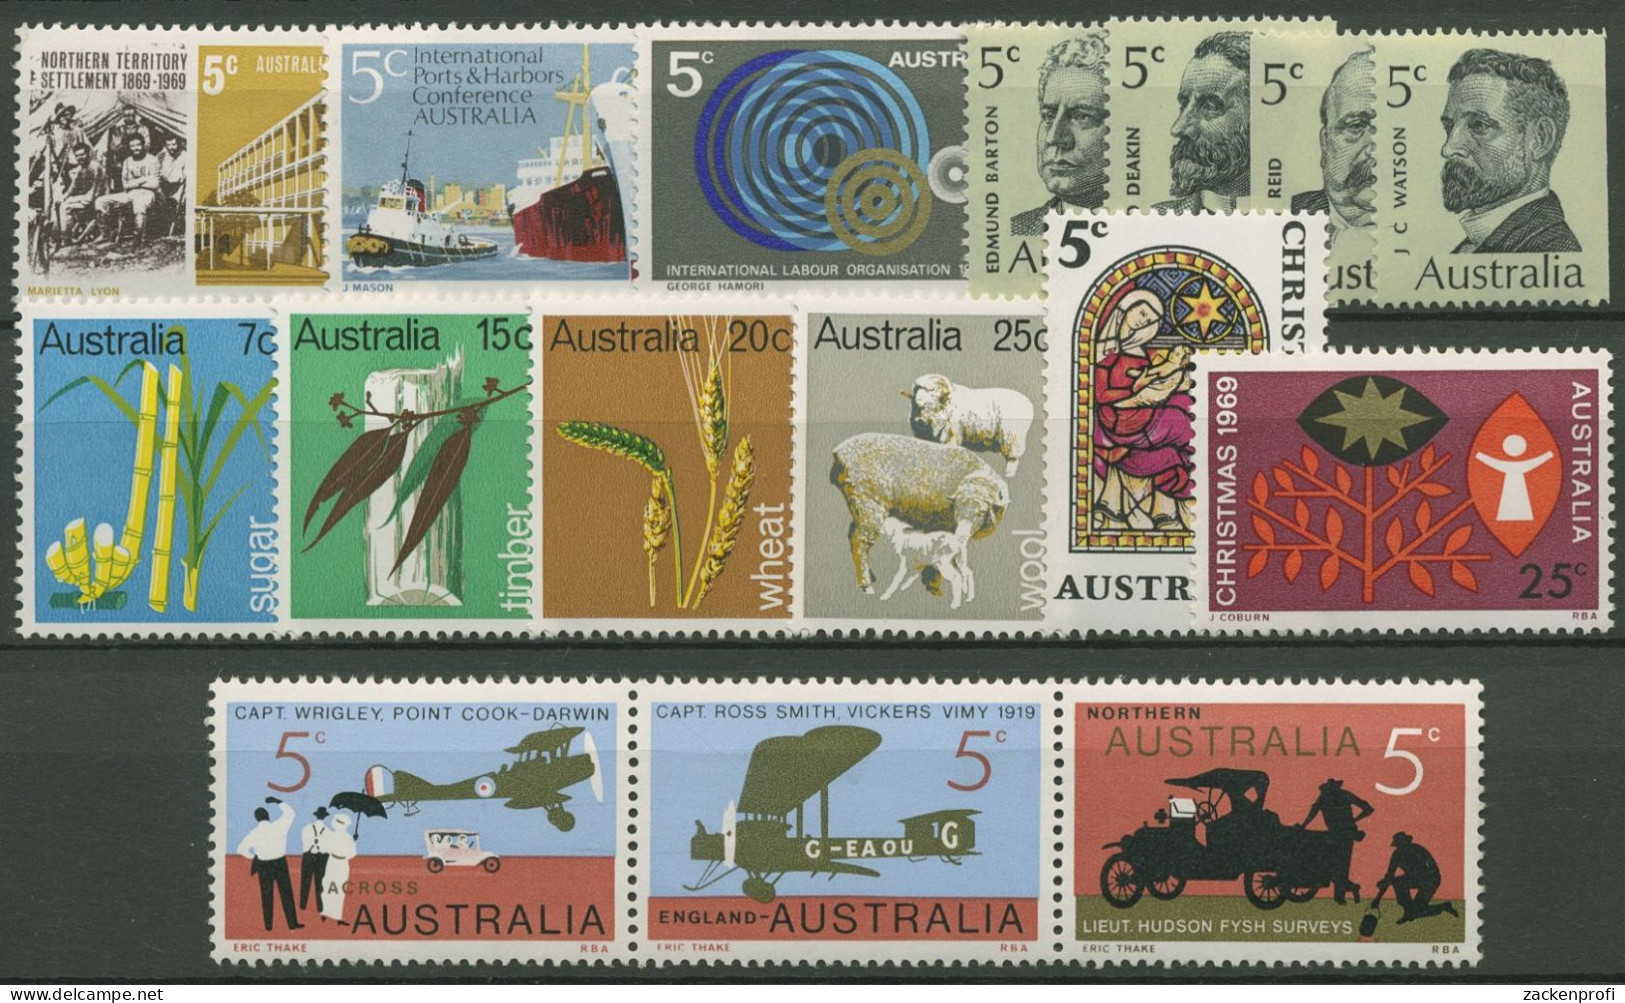 Australien 1969 Jahrgang Komplett (415/30) Postfrisch (SG40373) - Complete Years